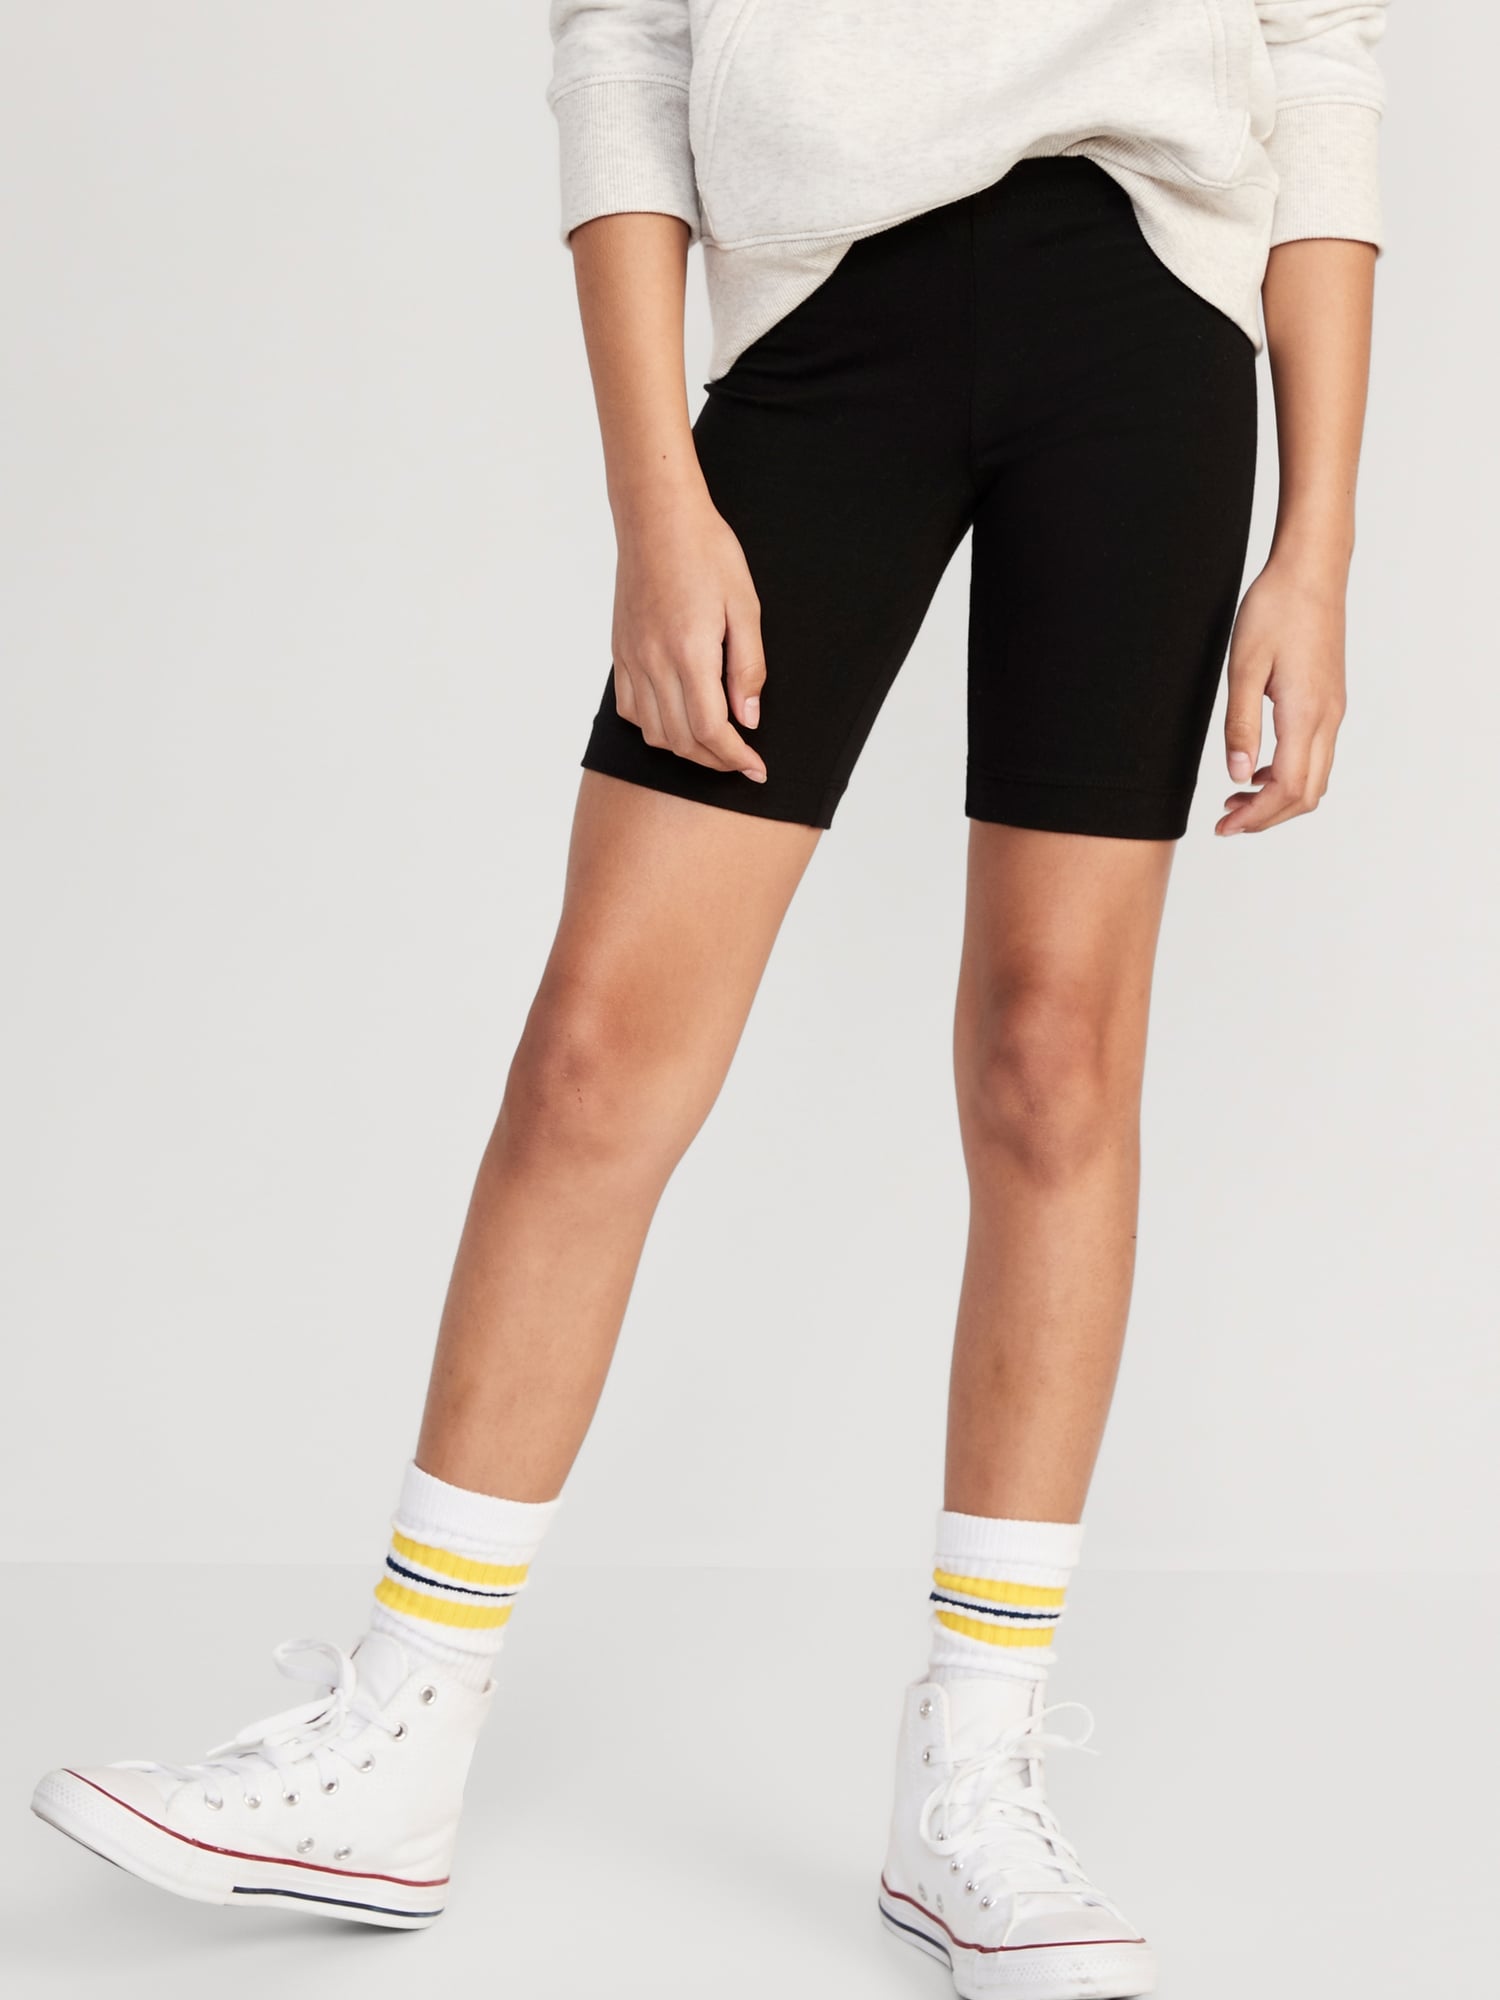 Old Navy Jersey-Knit Long Biker Shorts for Girls black. 1